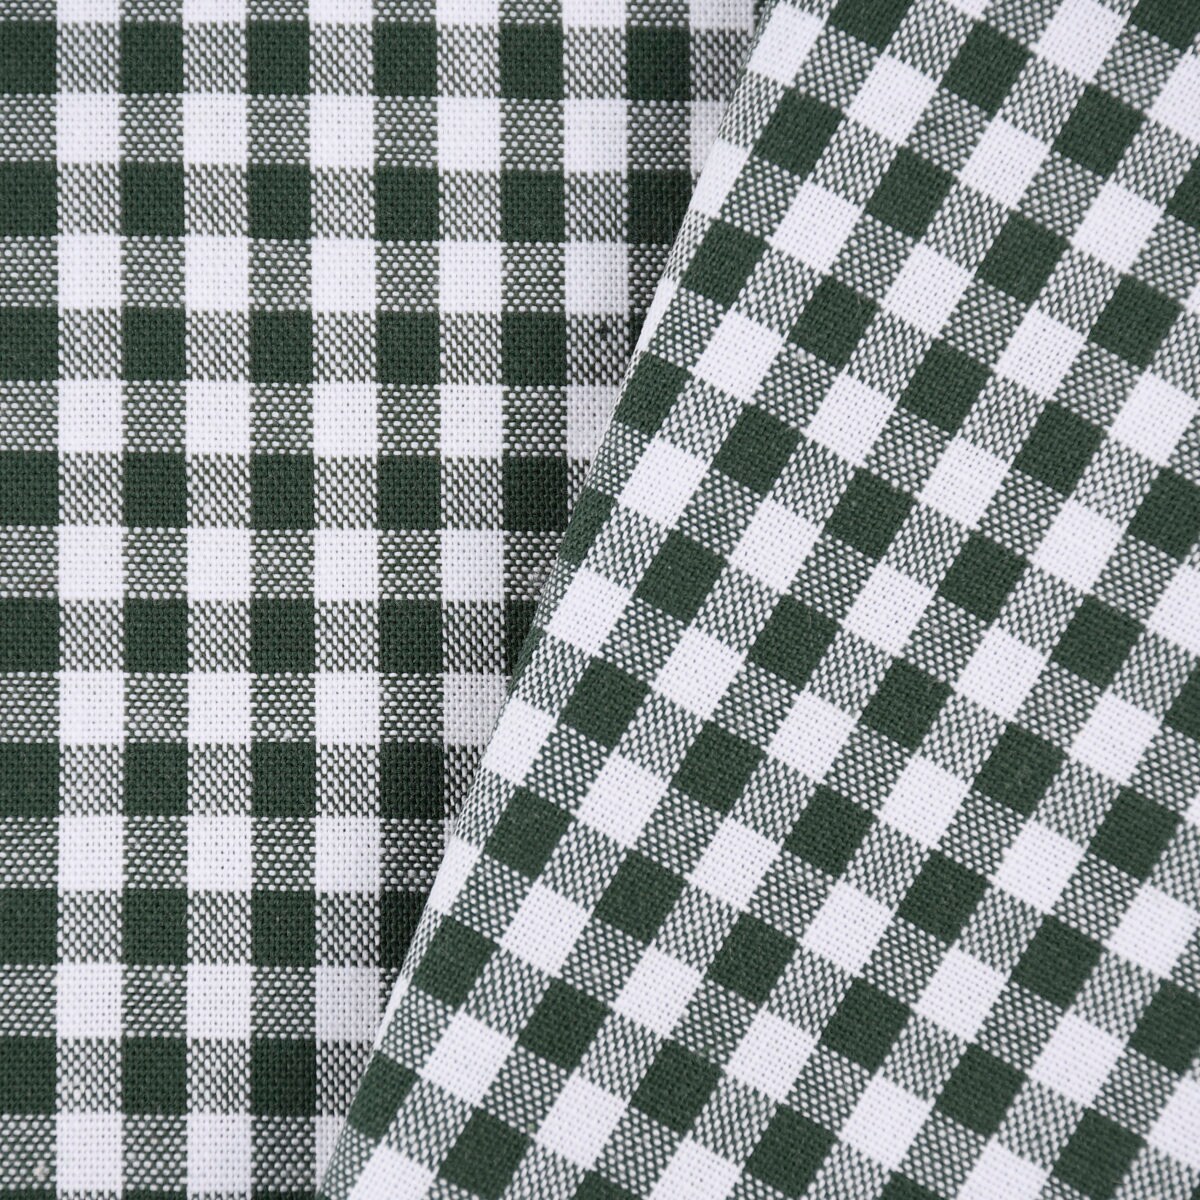 Cotton fabric plaid white dark green 5 mm | Etsy